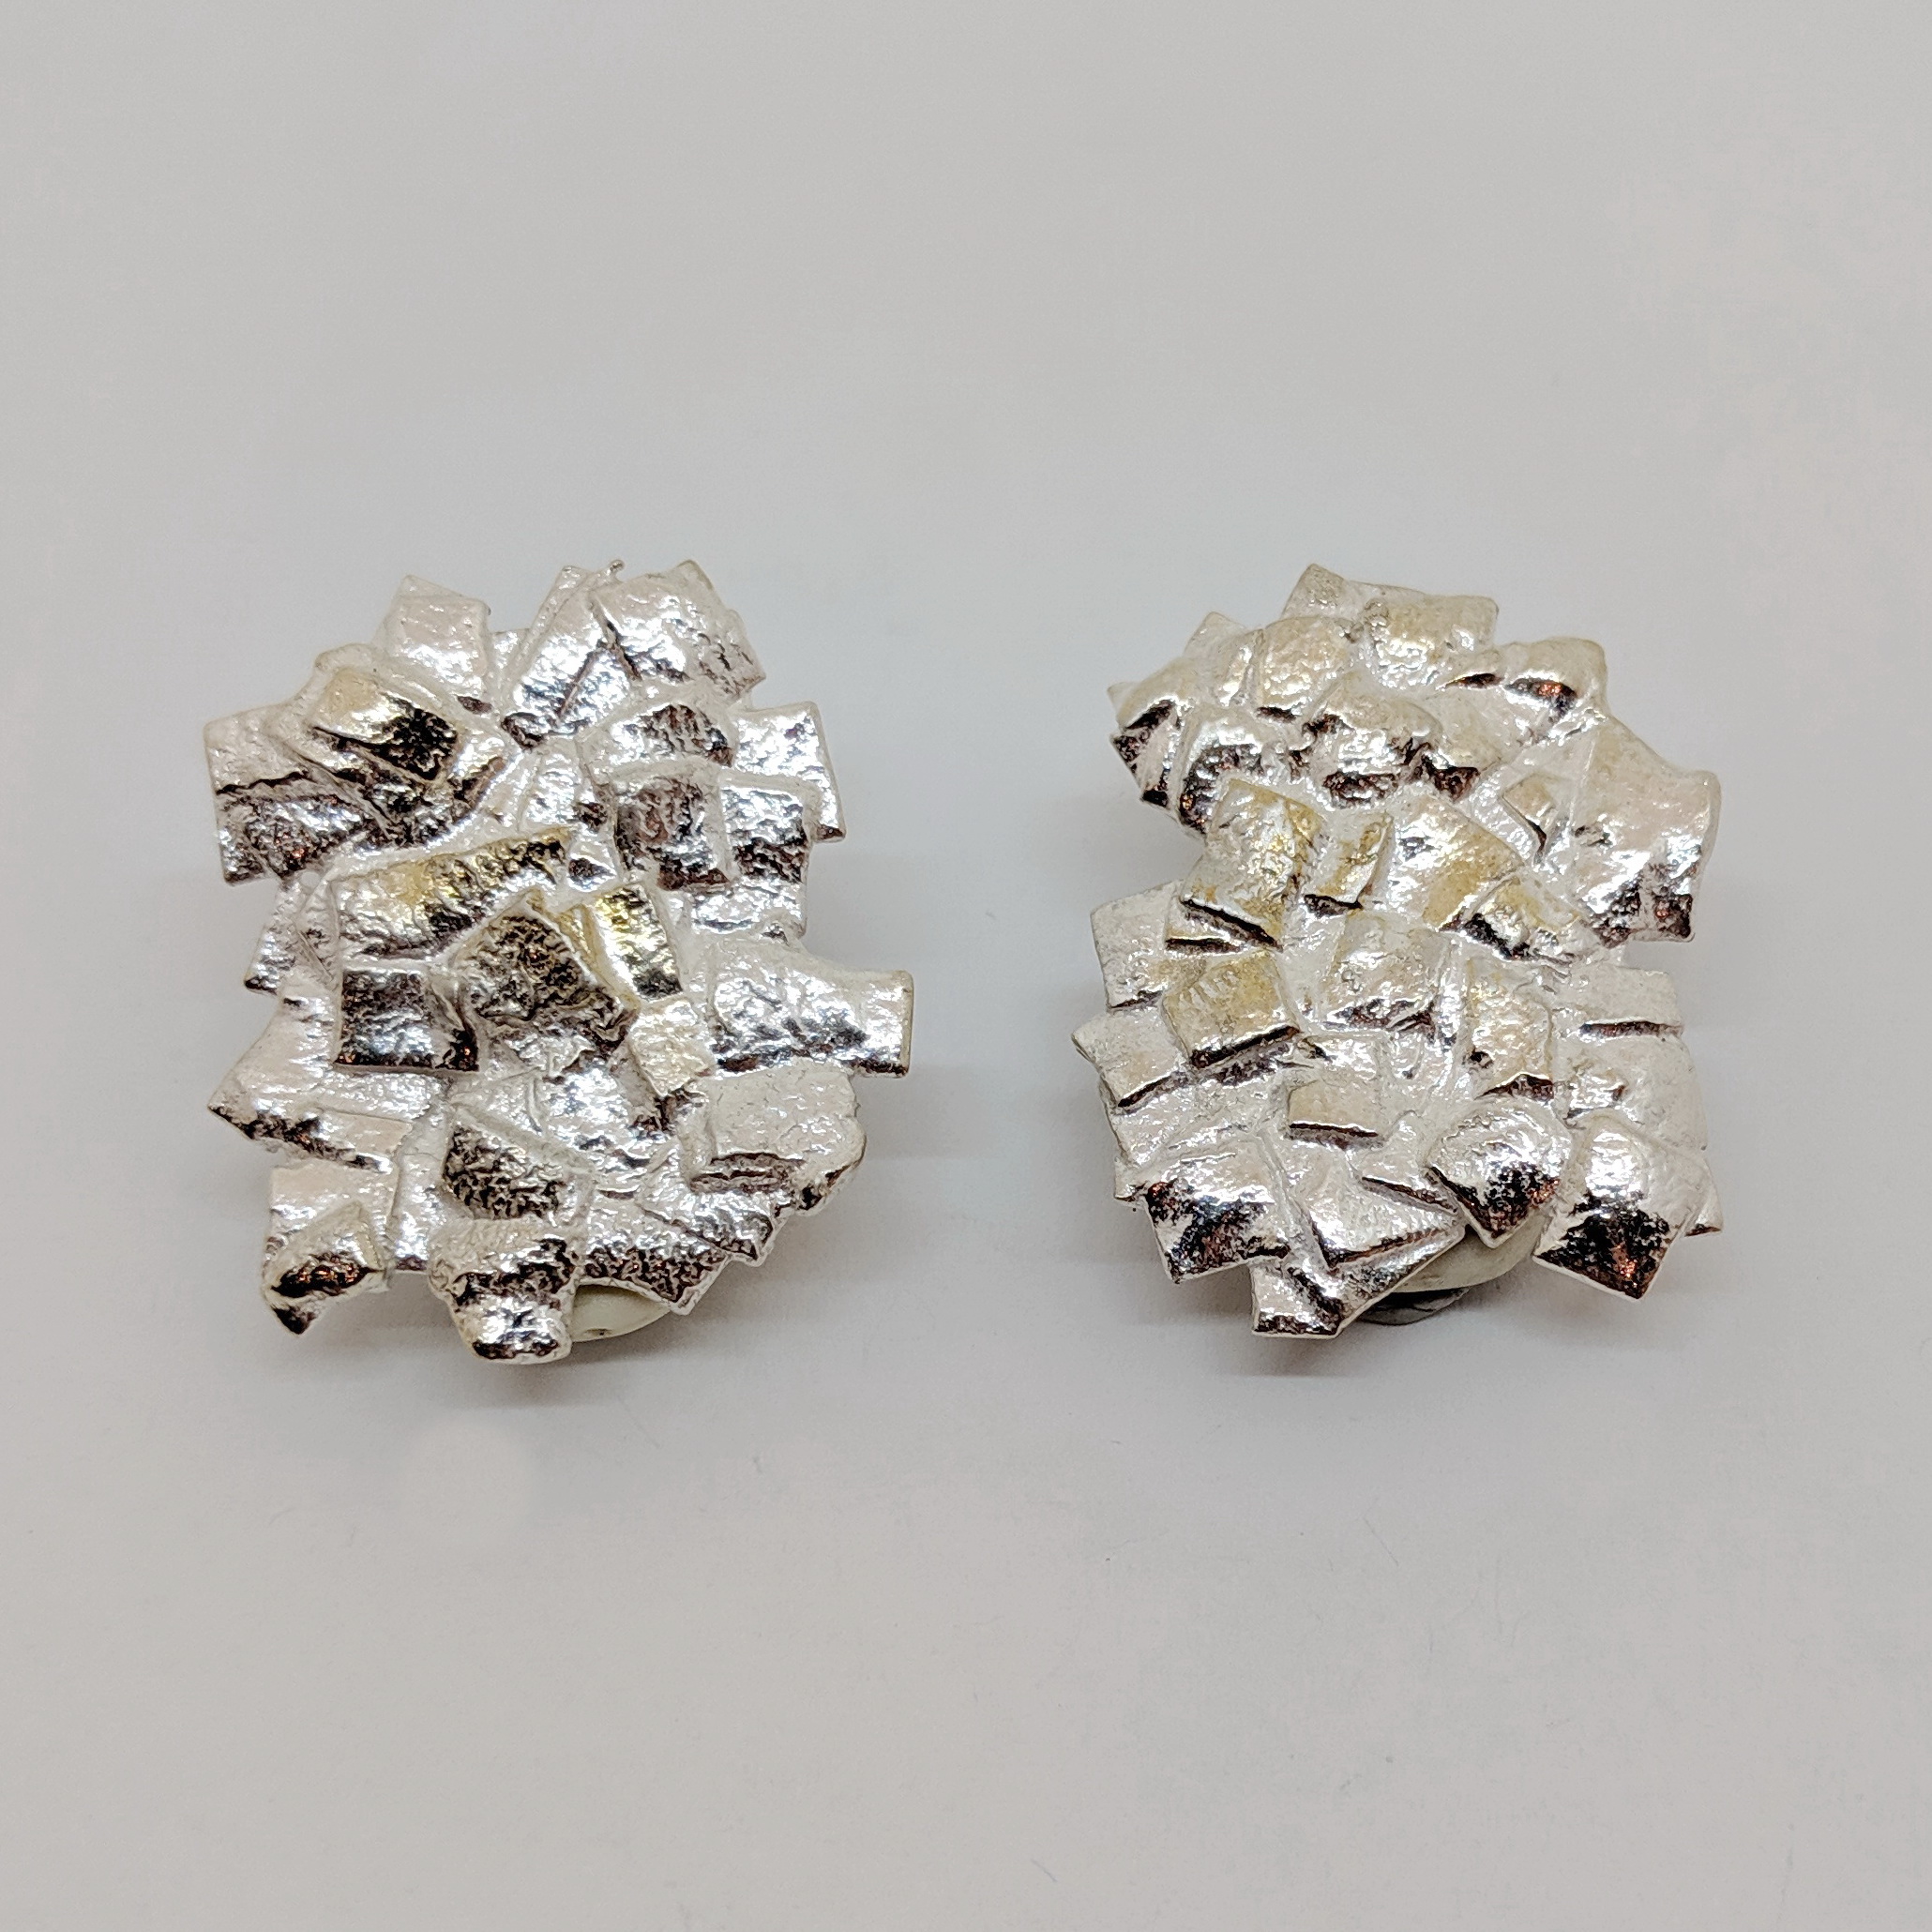 Silver Clip-On Earrings by Barbara Adams - The Avenue Gallery